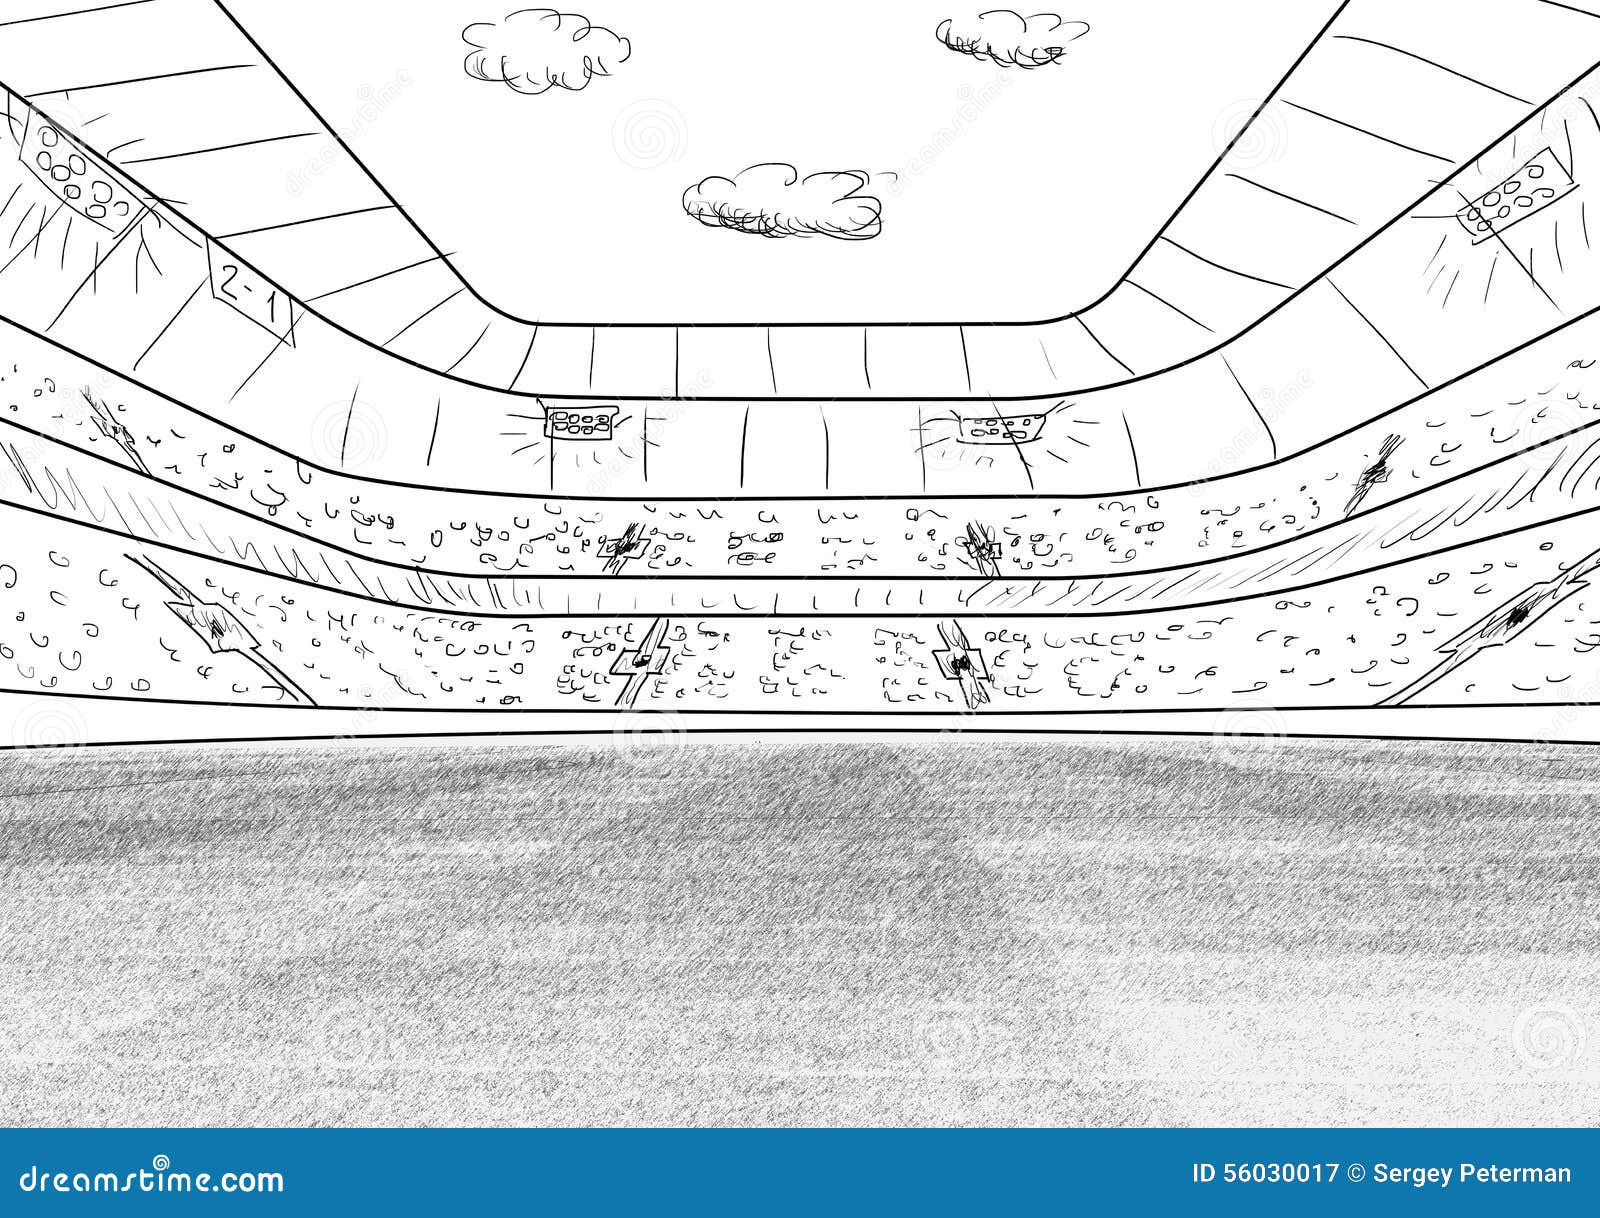 Soccer stadium. Sketch of soccer or football stadium background. | CanStock